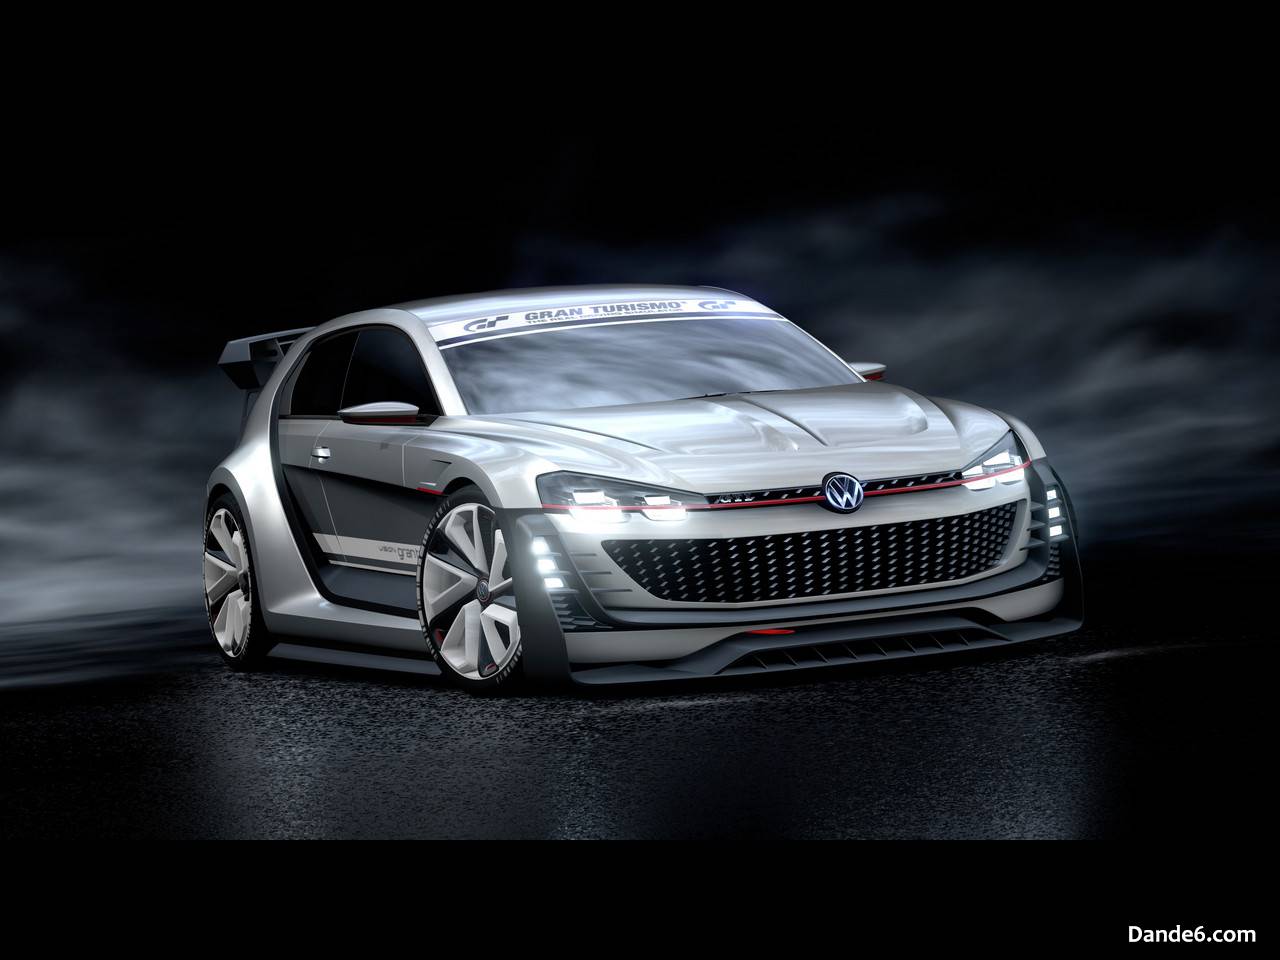 2015 VW GTI Supersport Vision Gran Turismo Concept